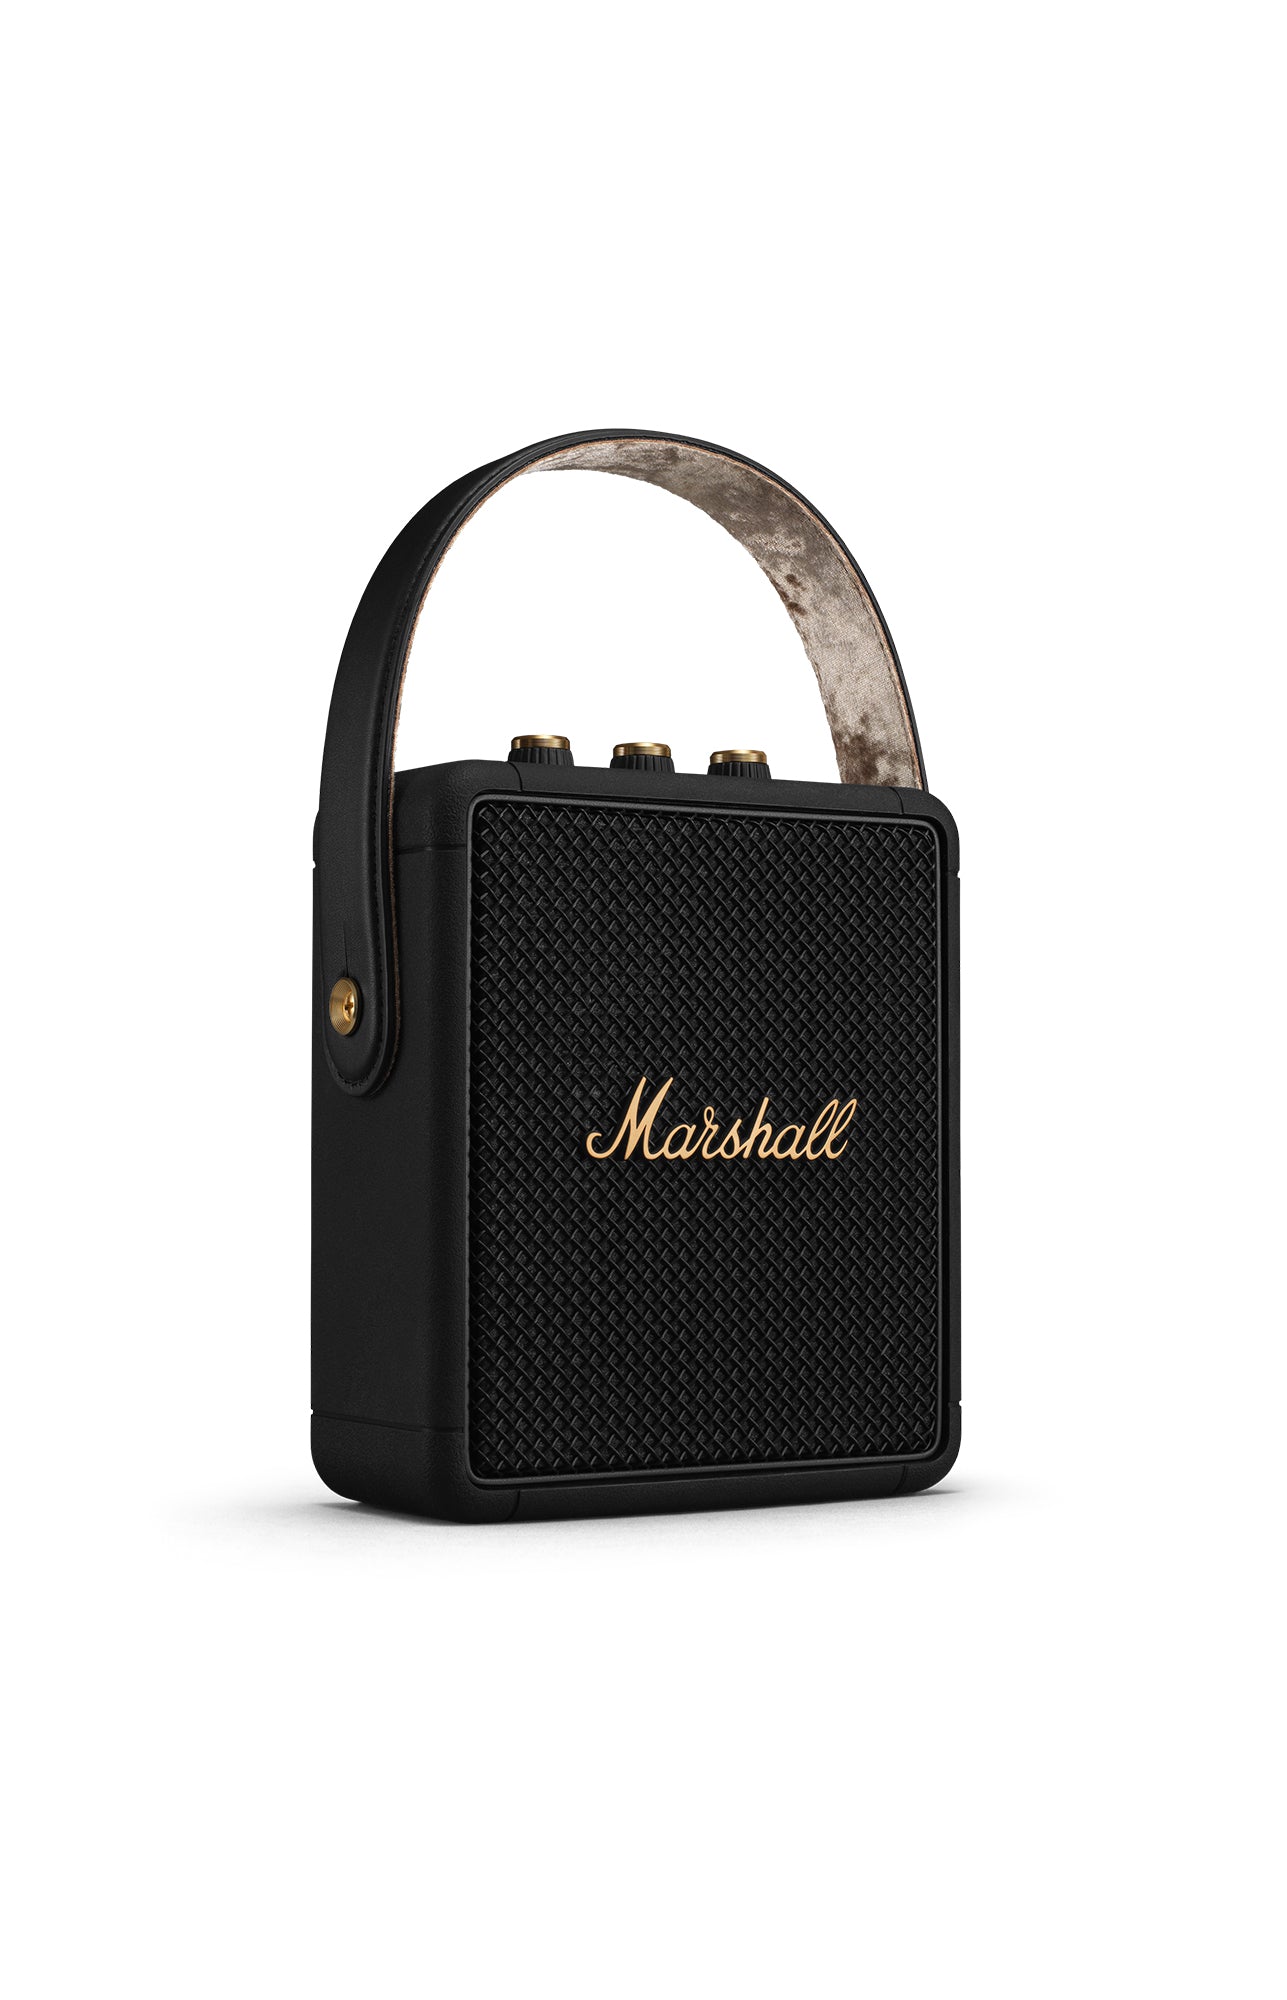 Marshall STOCKWELL II BLUETOOTH - BLACK AND BRASS